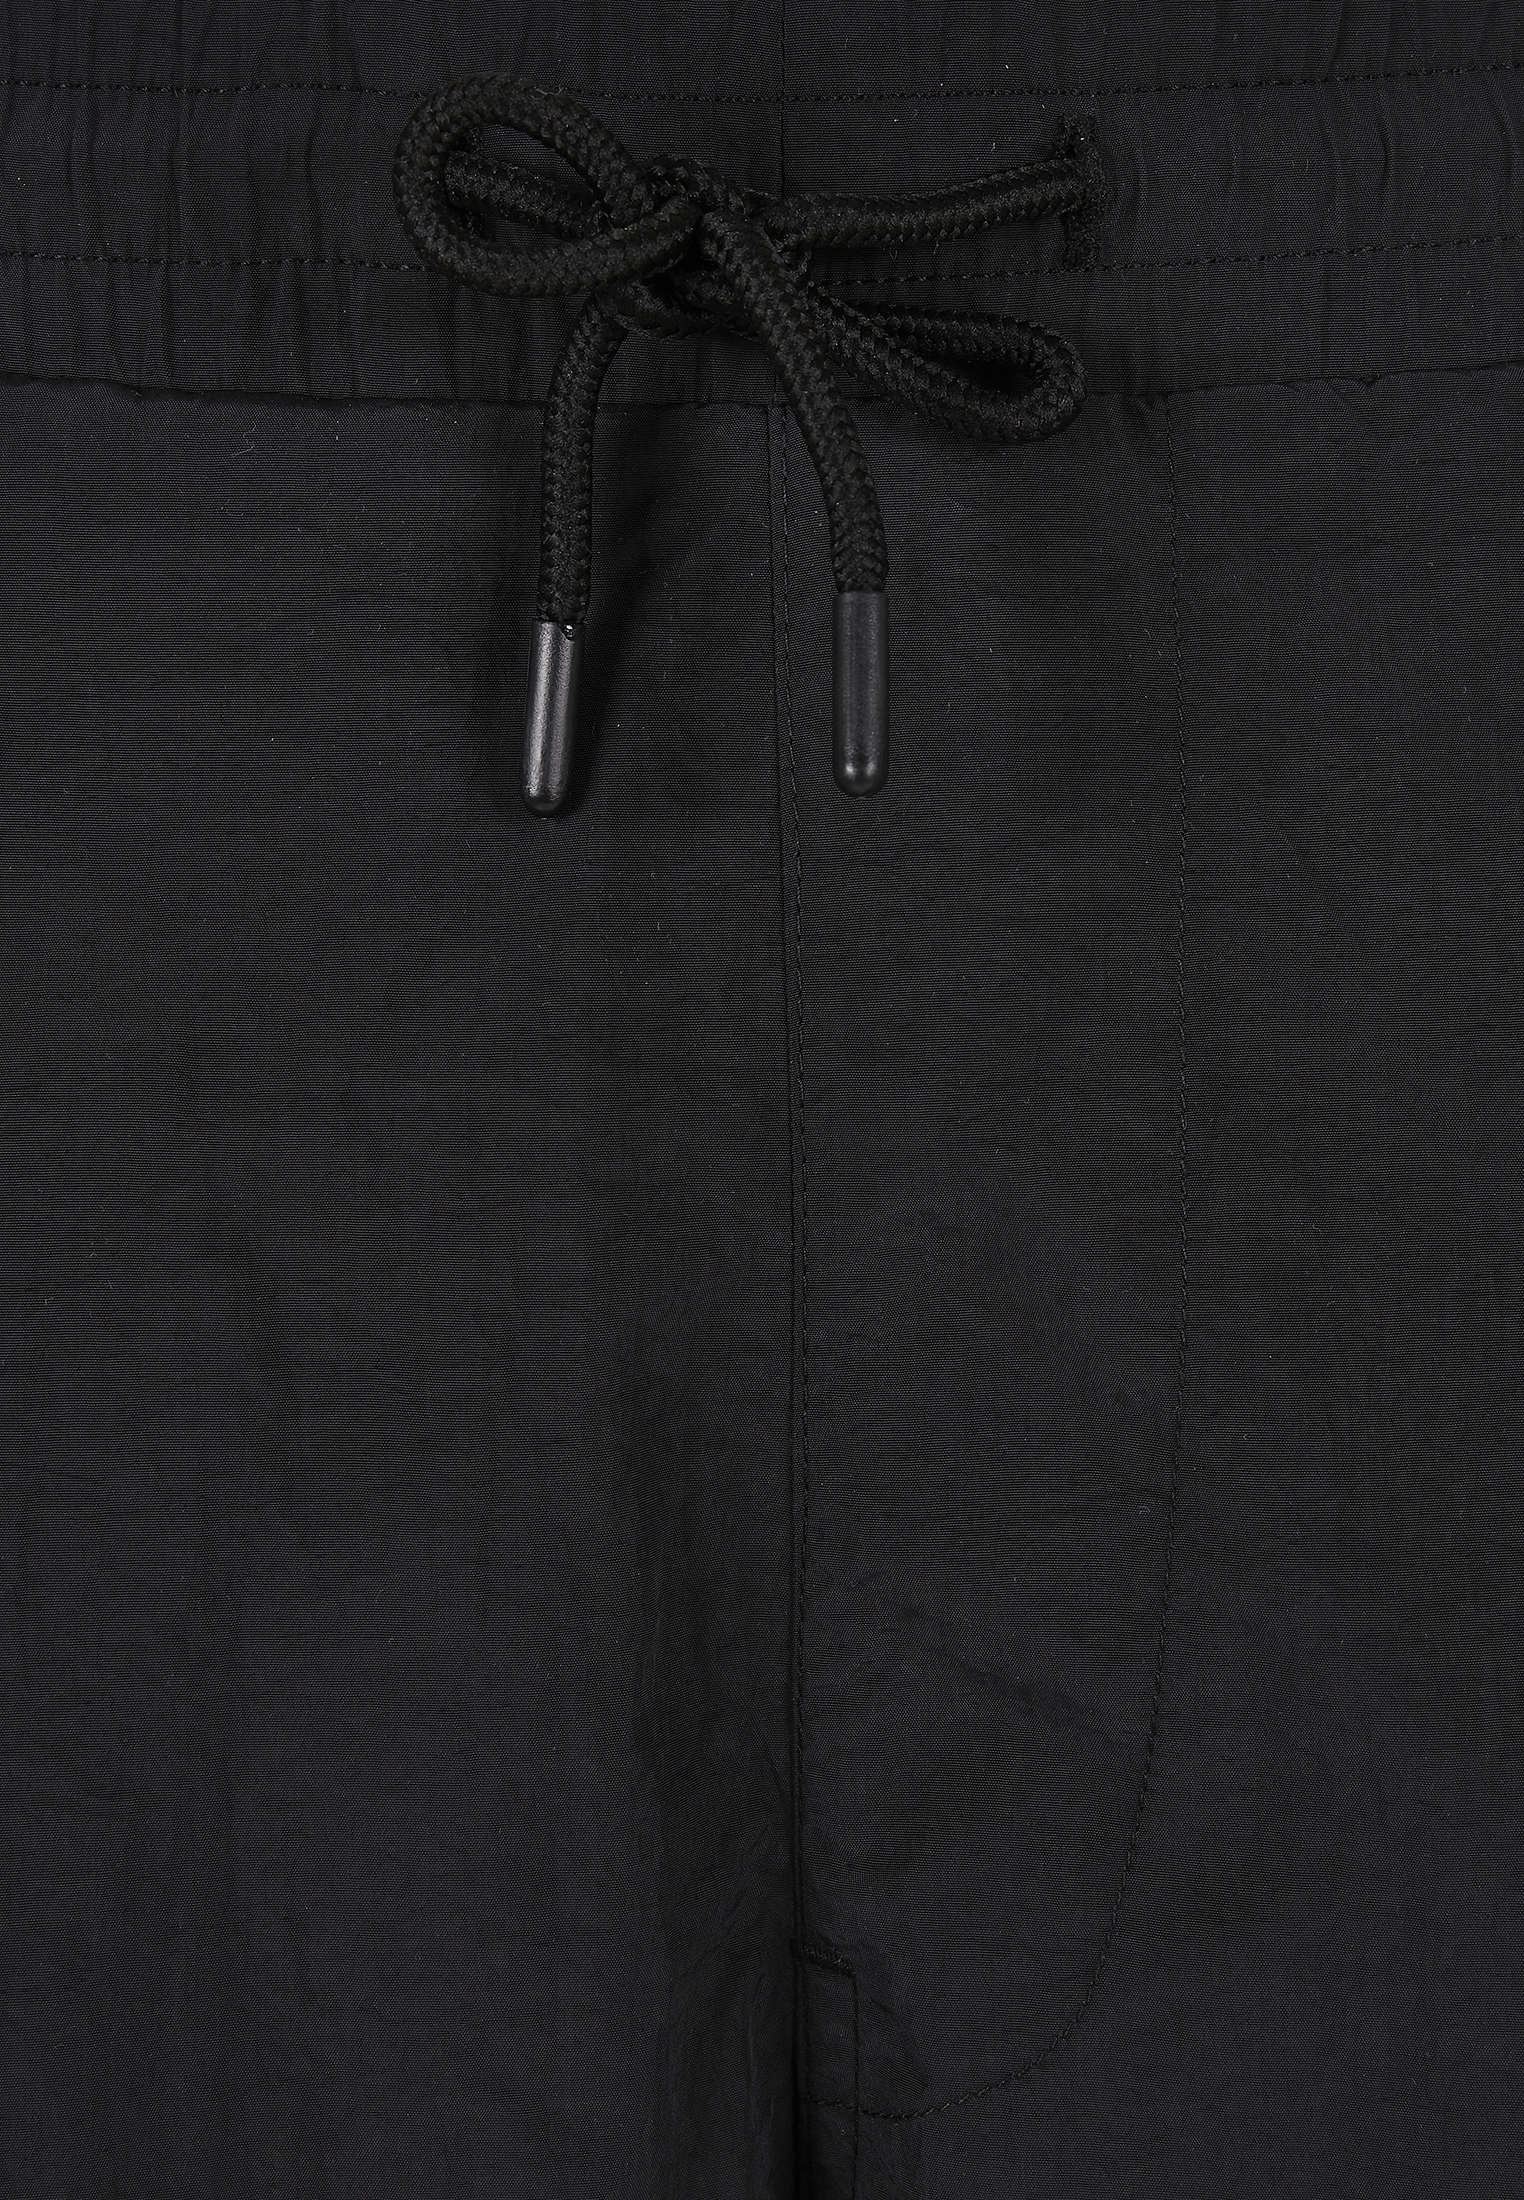 Cargo Hosen & Shorts Nylon Cargo Shorts in Farbe black